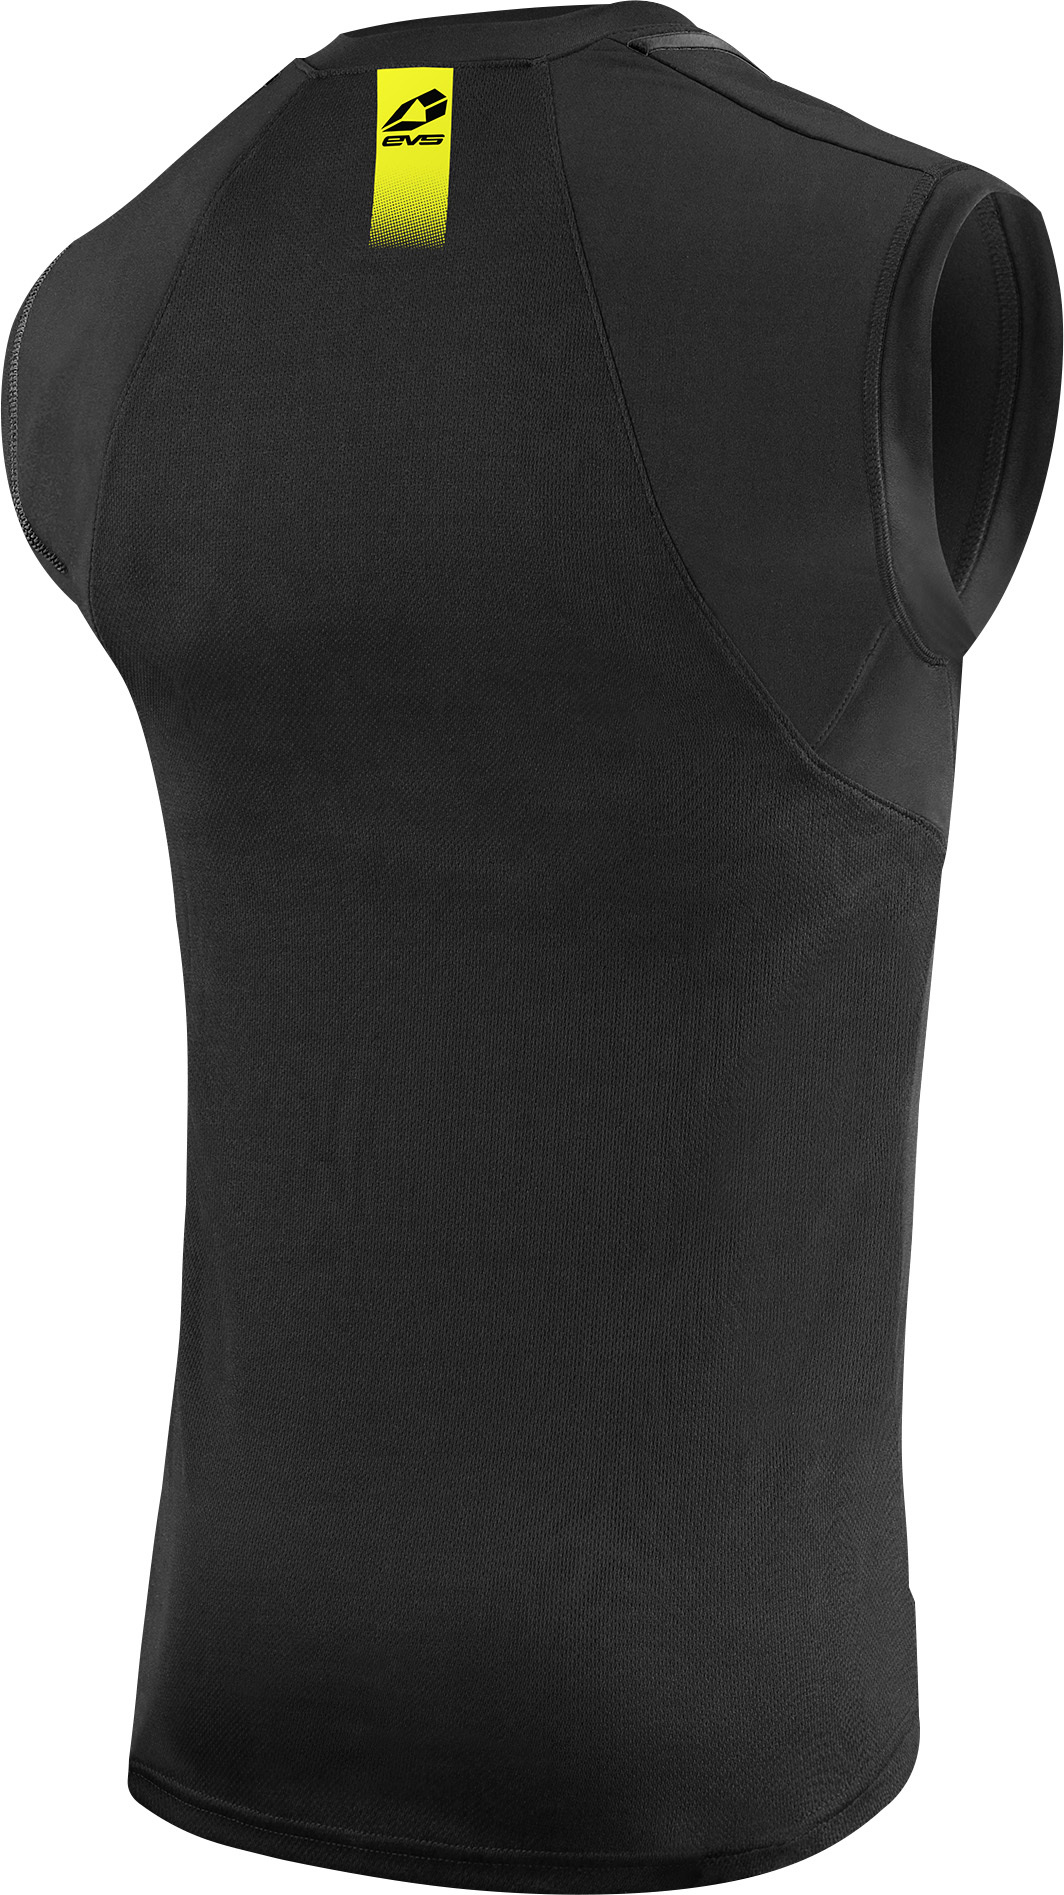 Sleeveless Tug Shirt Black Small - Click Image to Close